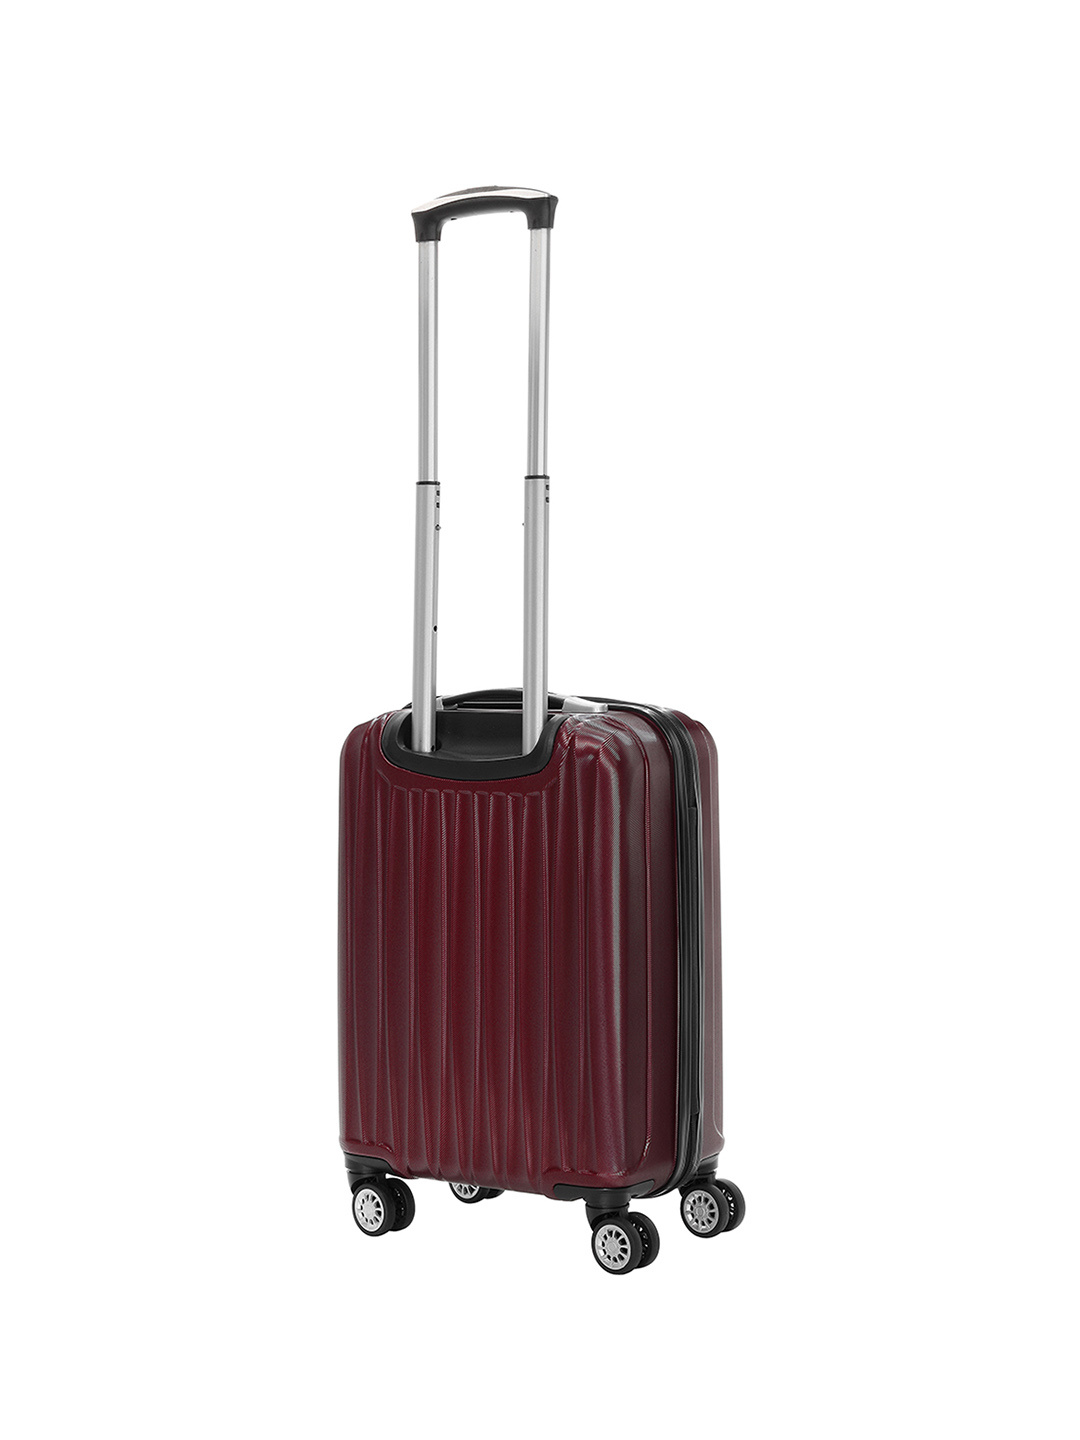 Фото Маленький чемодан на колесах из рифленого ABS пластика бордового цвета Чемоданы